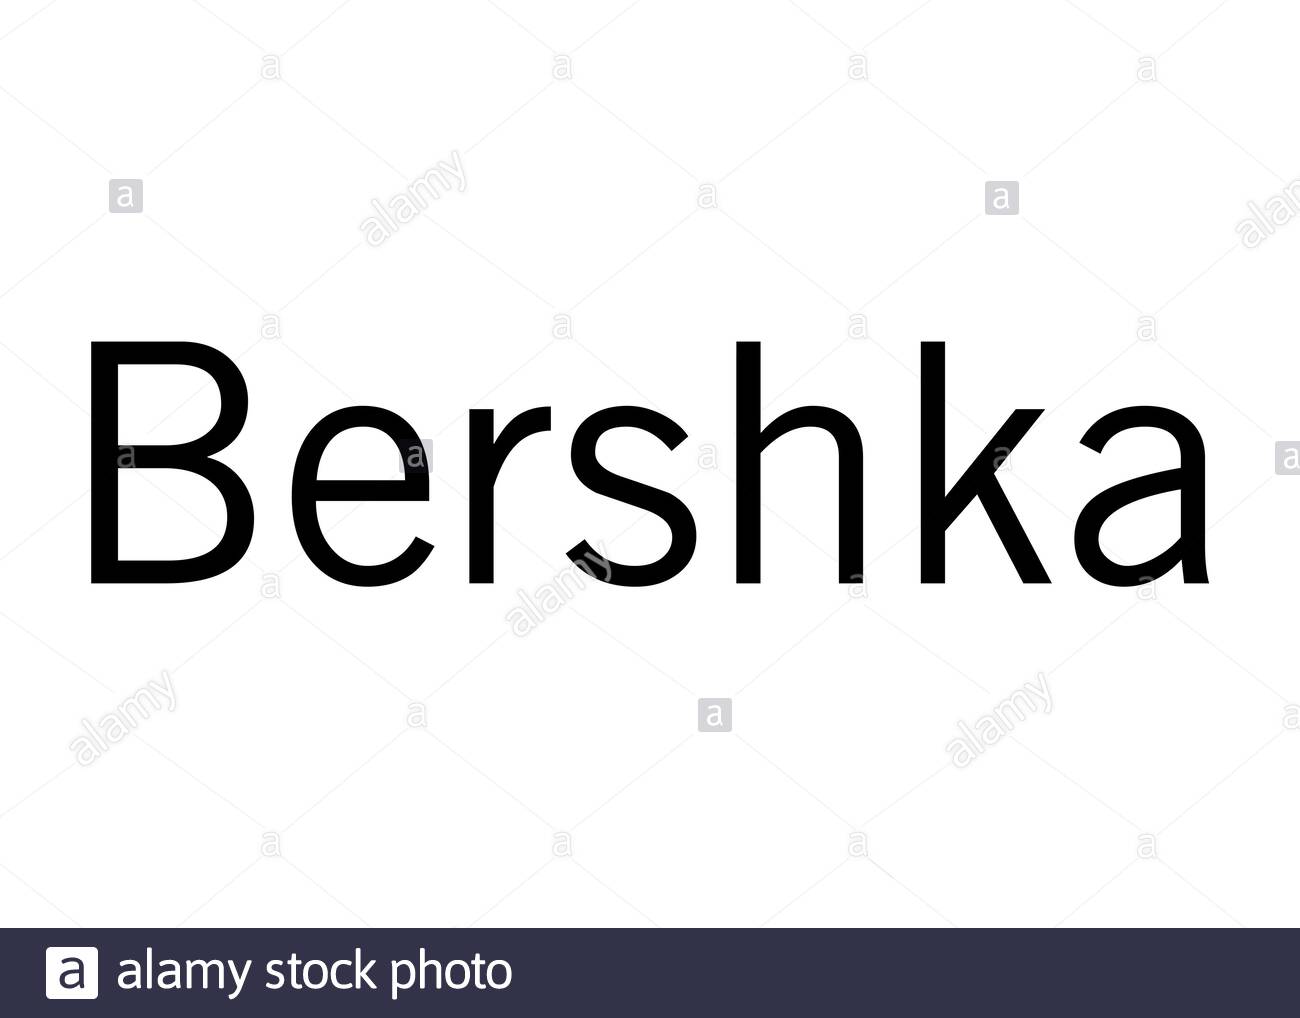 Bershka logo Stock Photo - Alamy